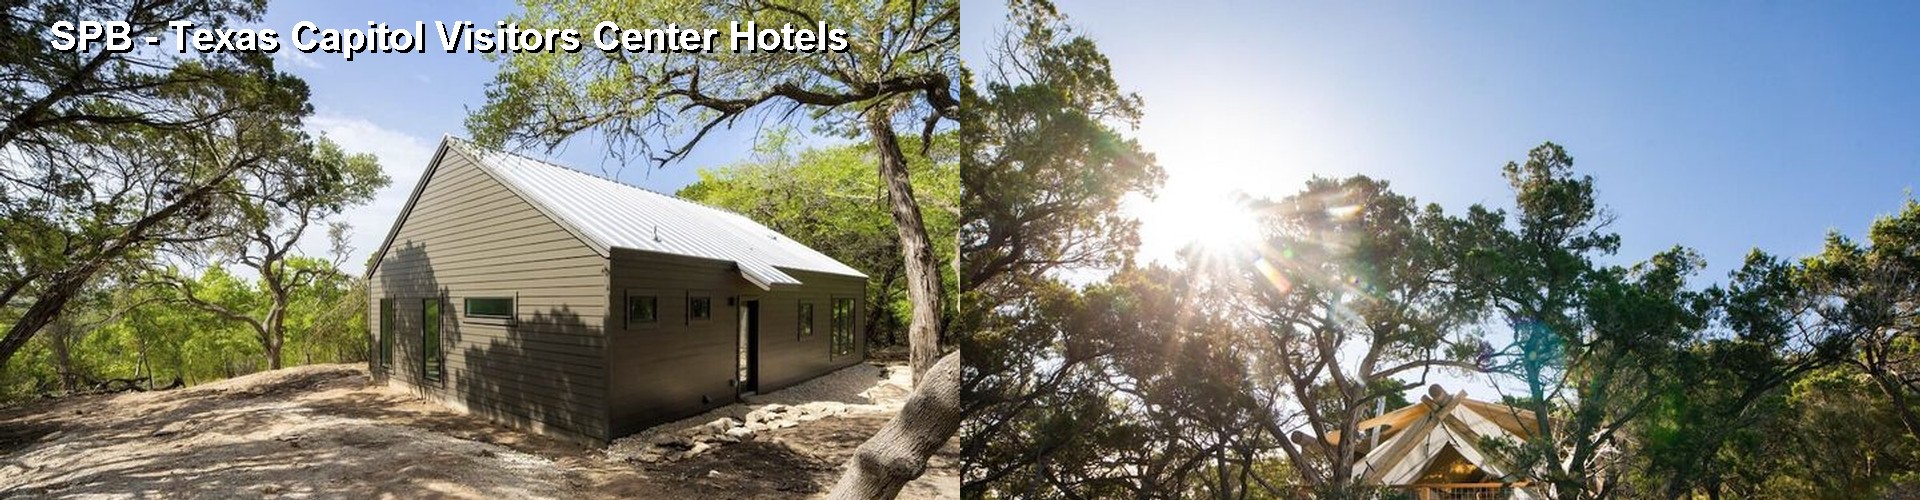 4 Best Hotels near SPB - Texas Capitol Visitors Center